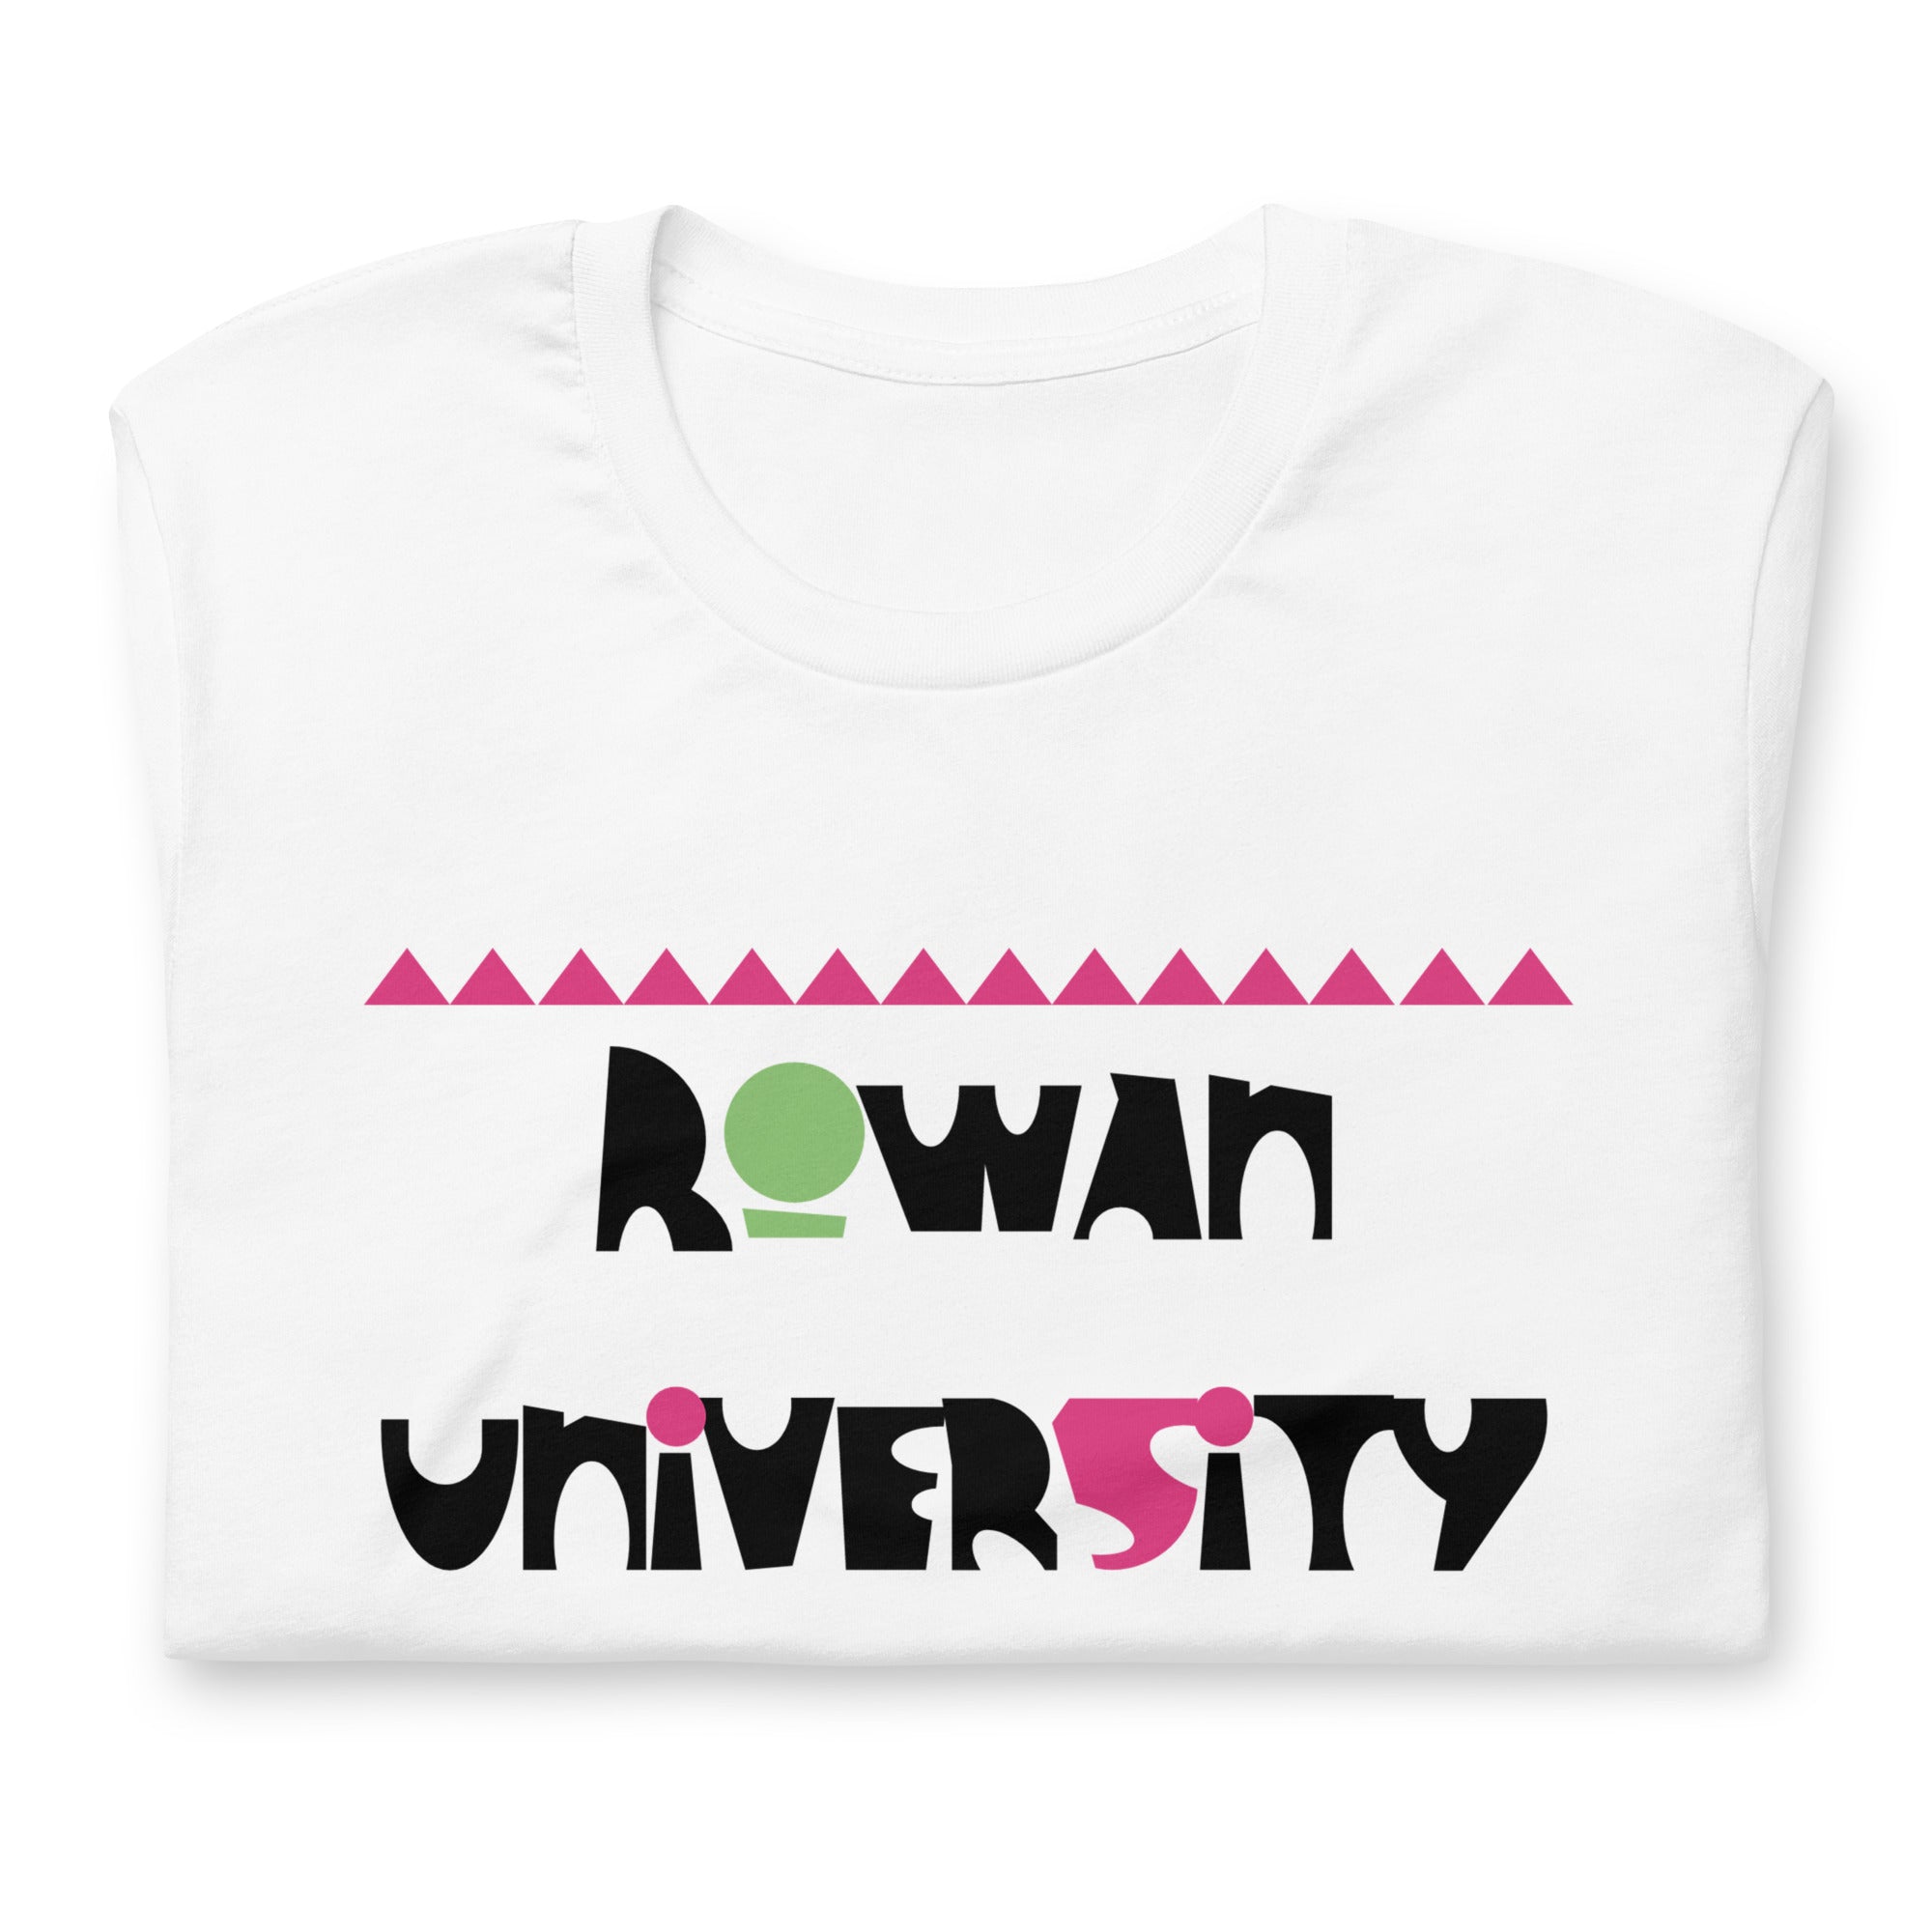 Rowan University AKAlumni Unisex t-shirt